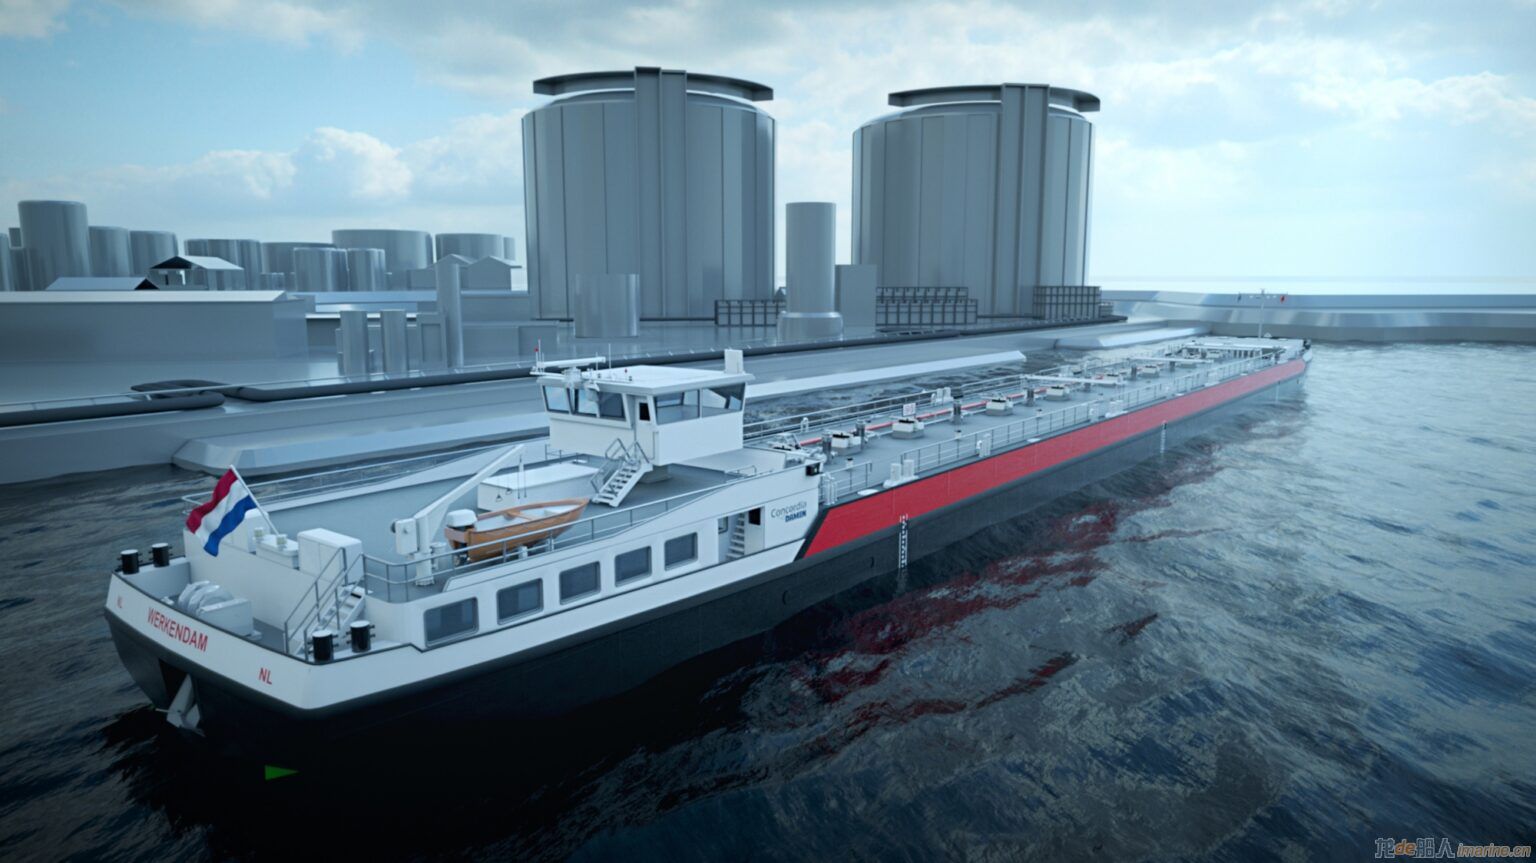 Concordia-Damen-scores-40-LNG-fueled-barges-order-1536x863.jpg